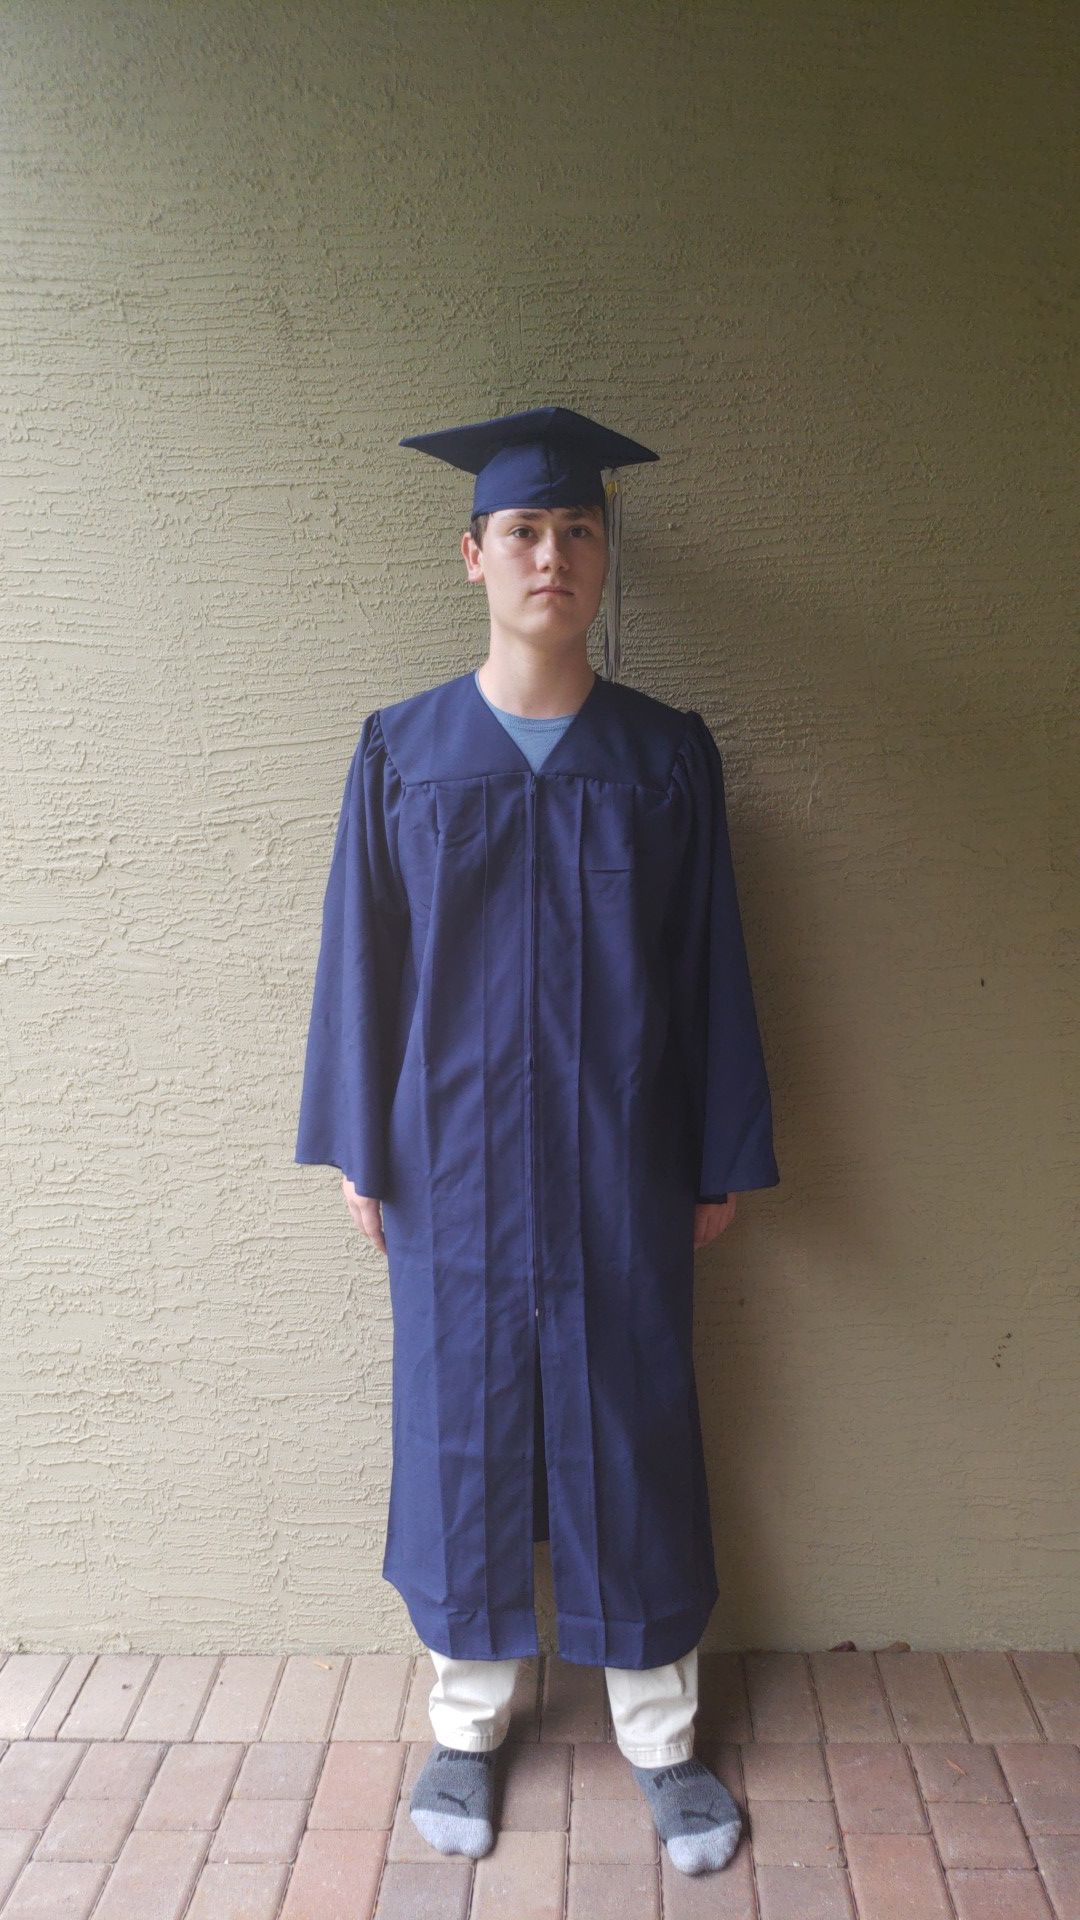 Graduation cap, gown and tassel multiple